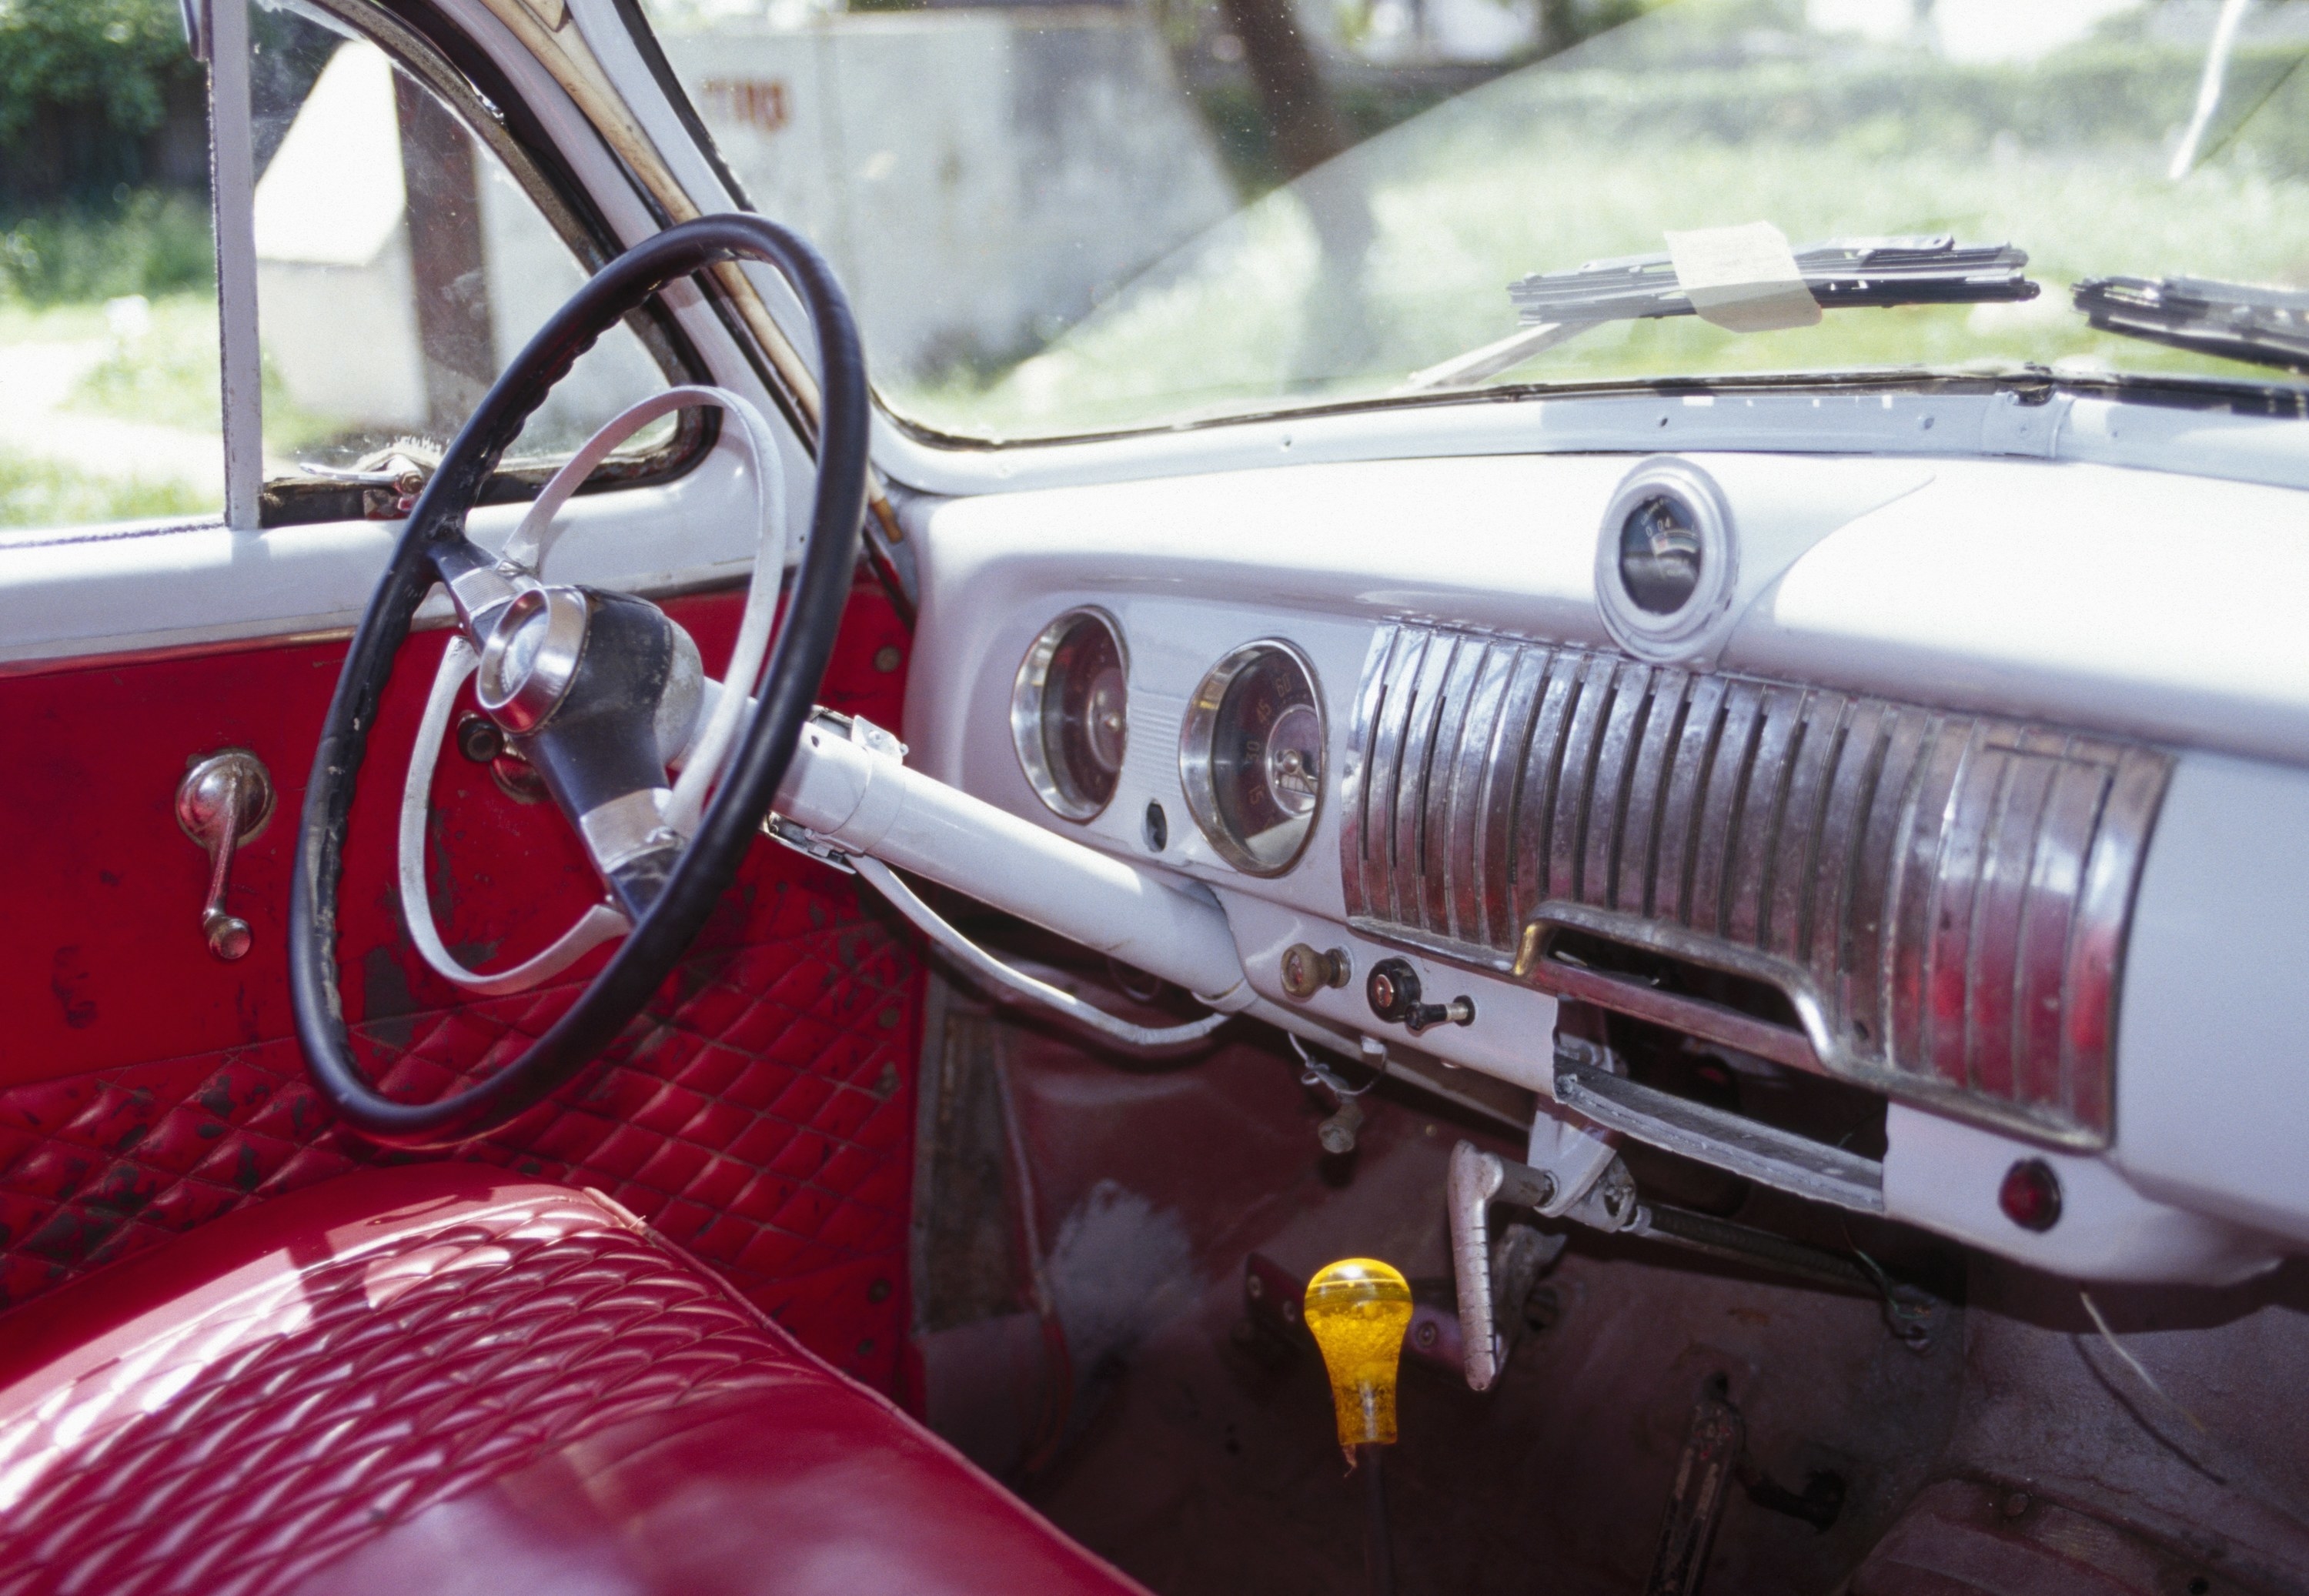 interior of a 1950s car